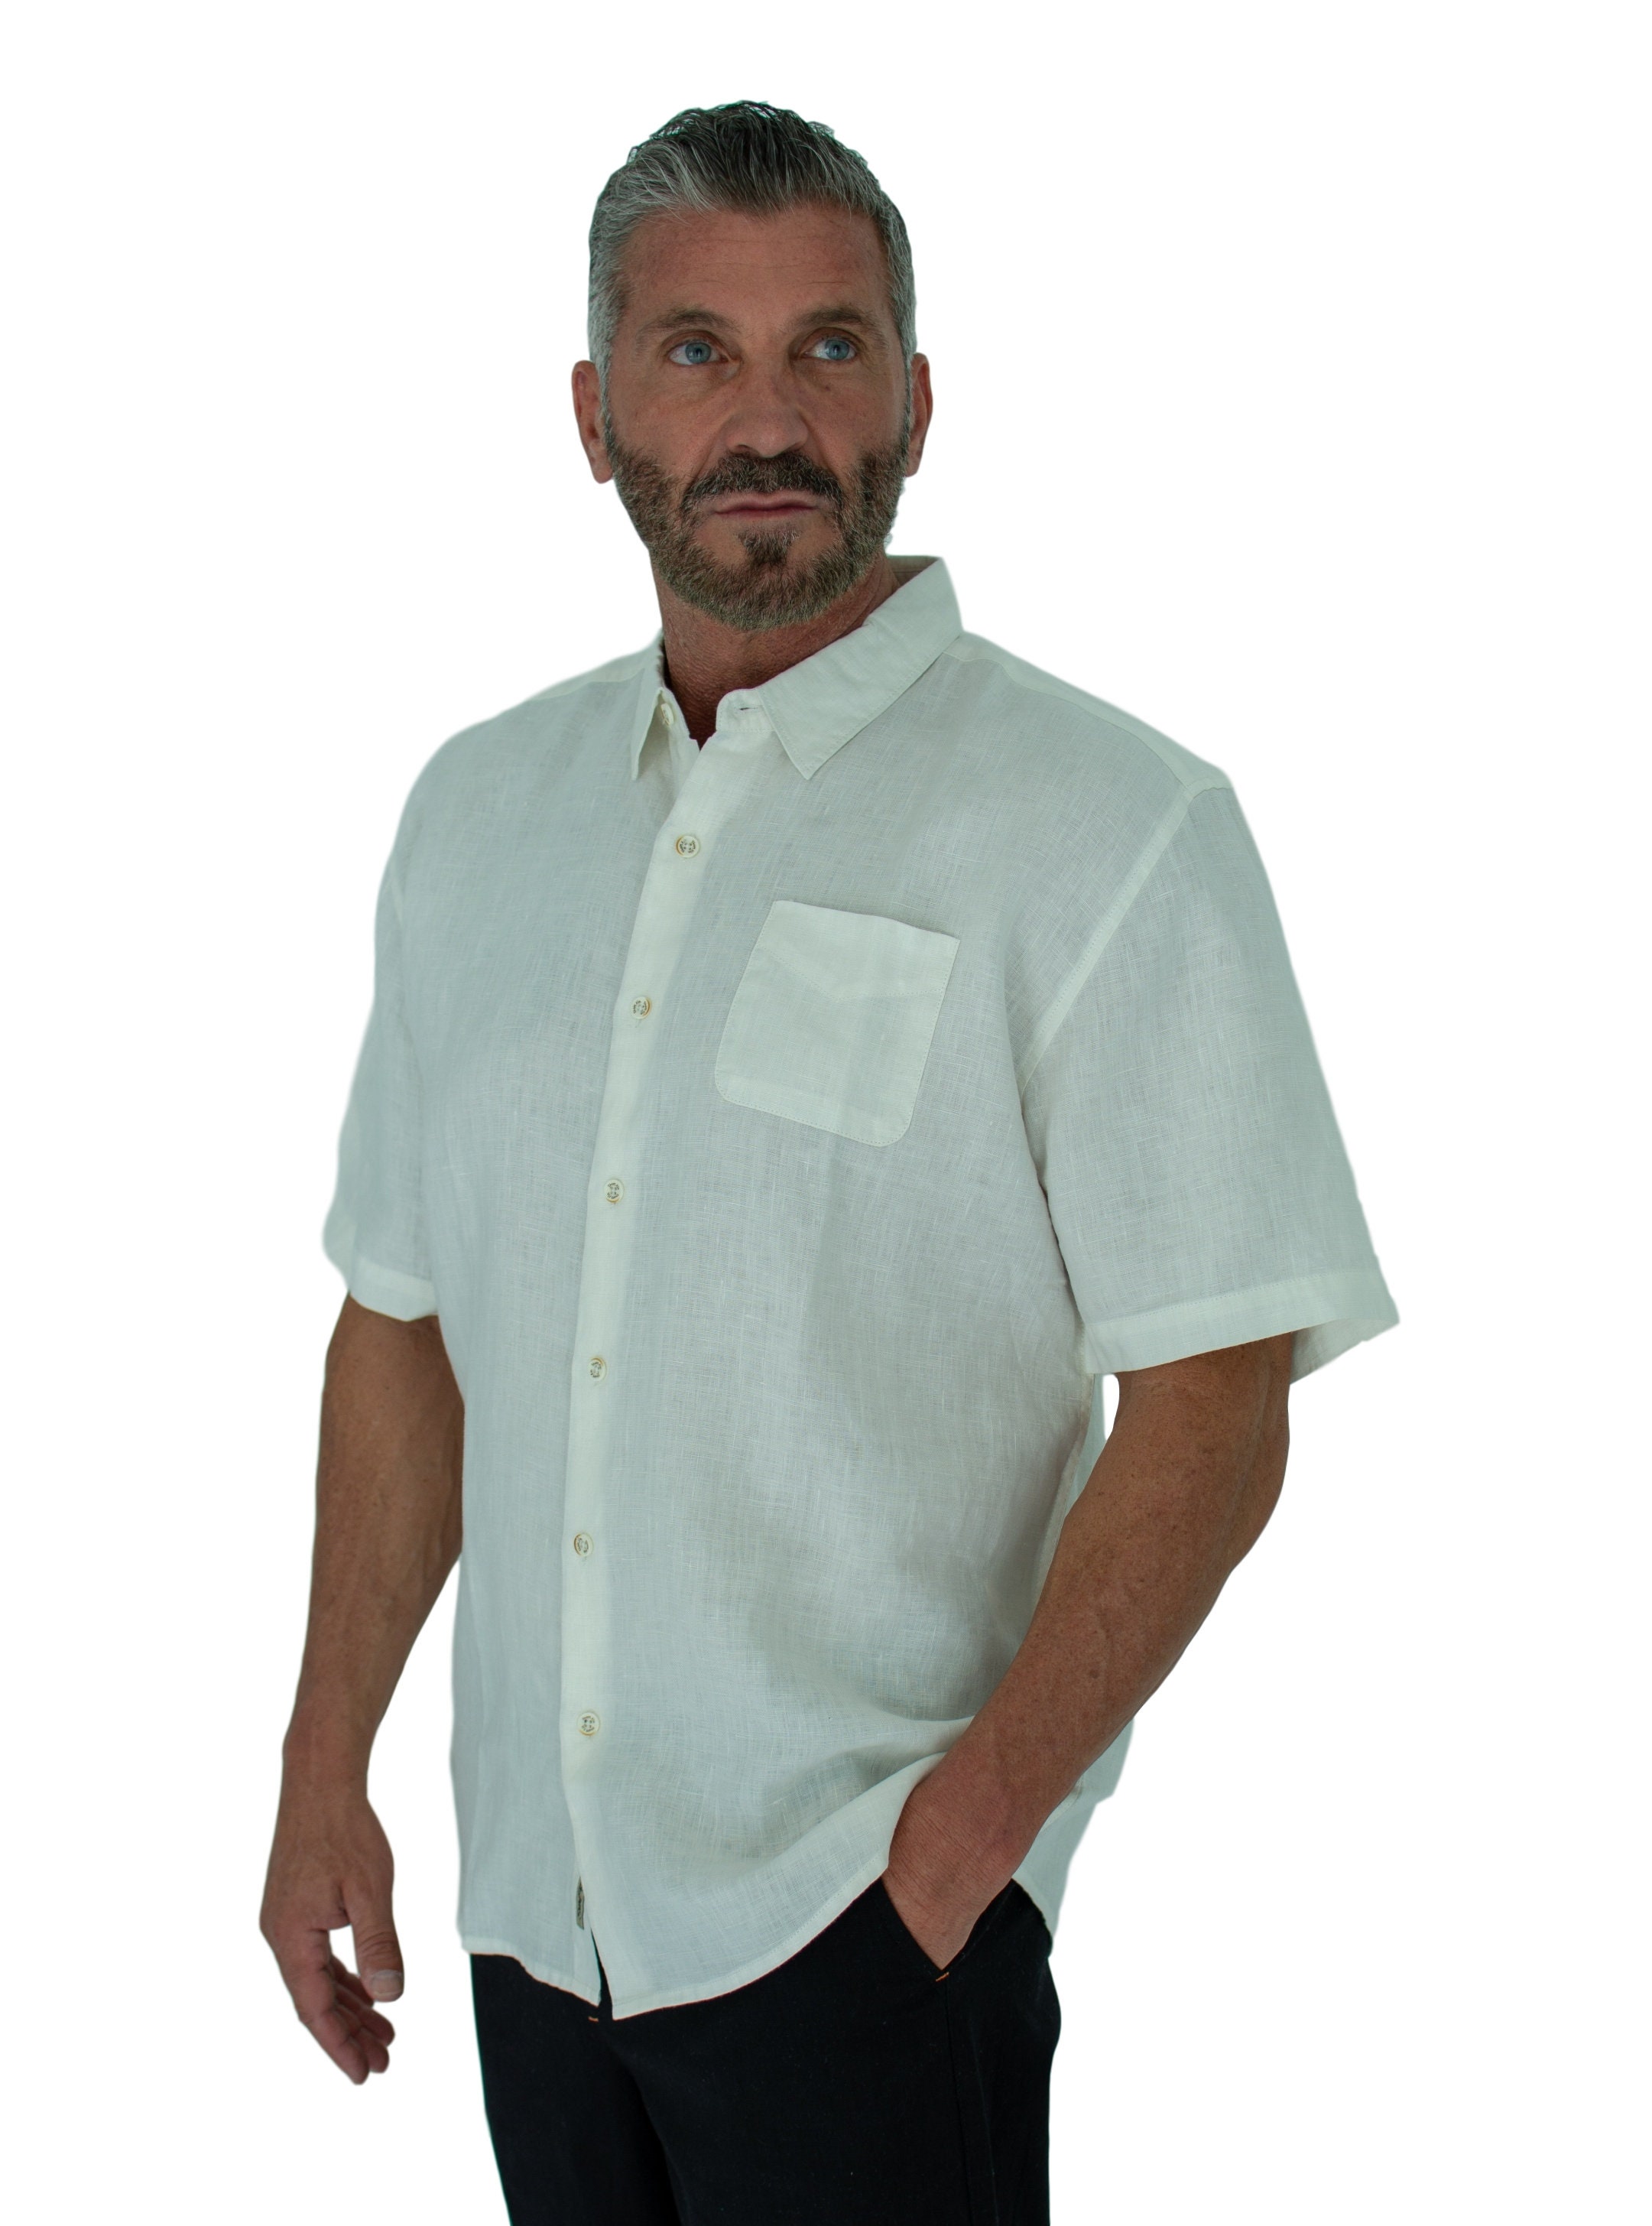  Lmtossey Camisas de lino de manga corta de estilo